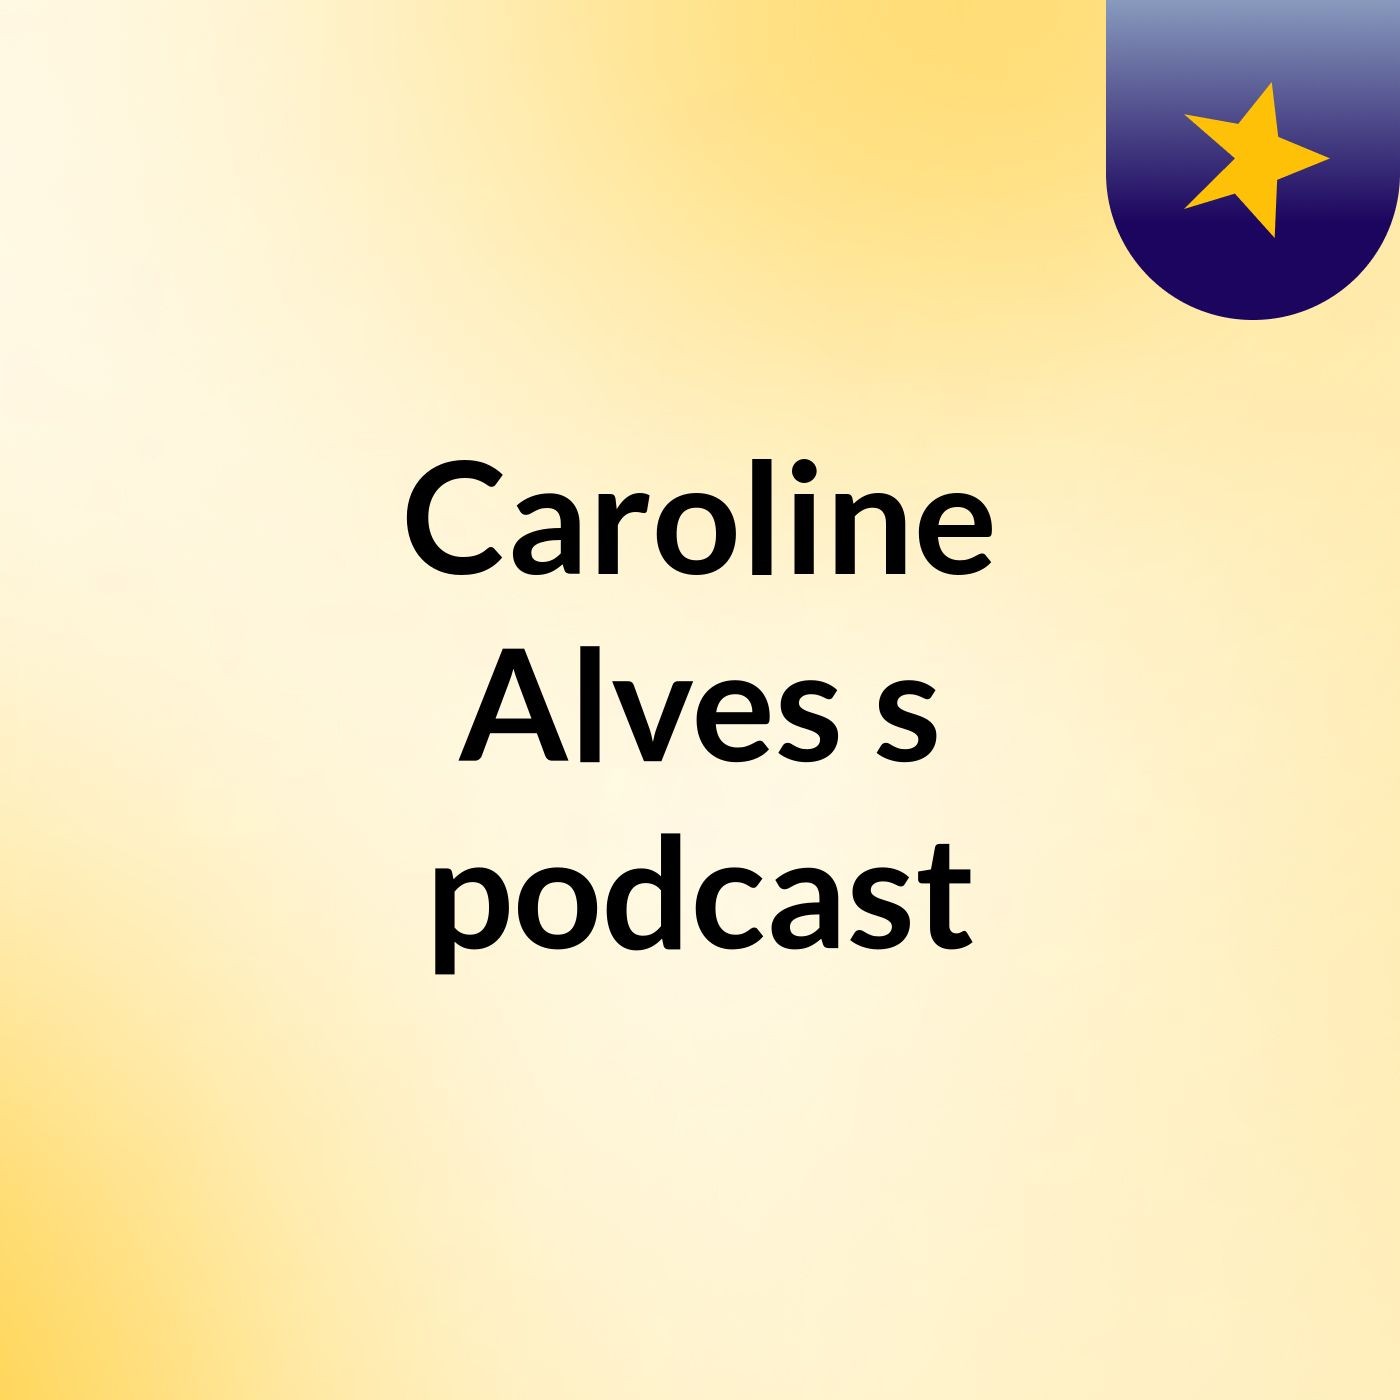 Caroline Alves's podcast